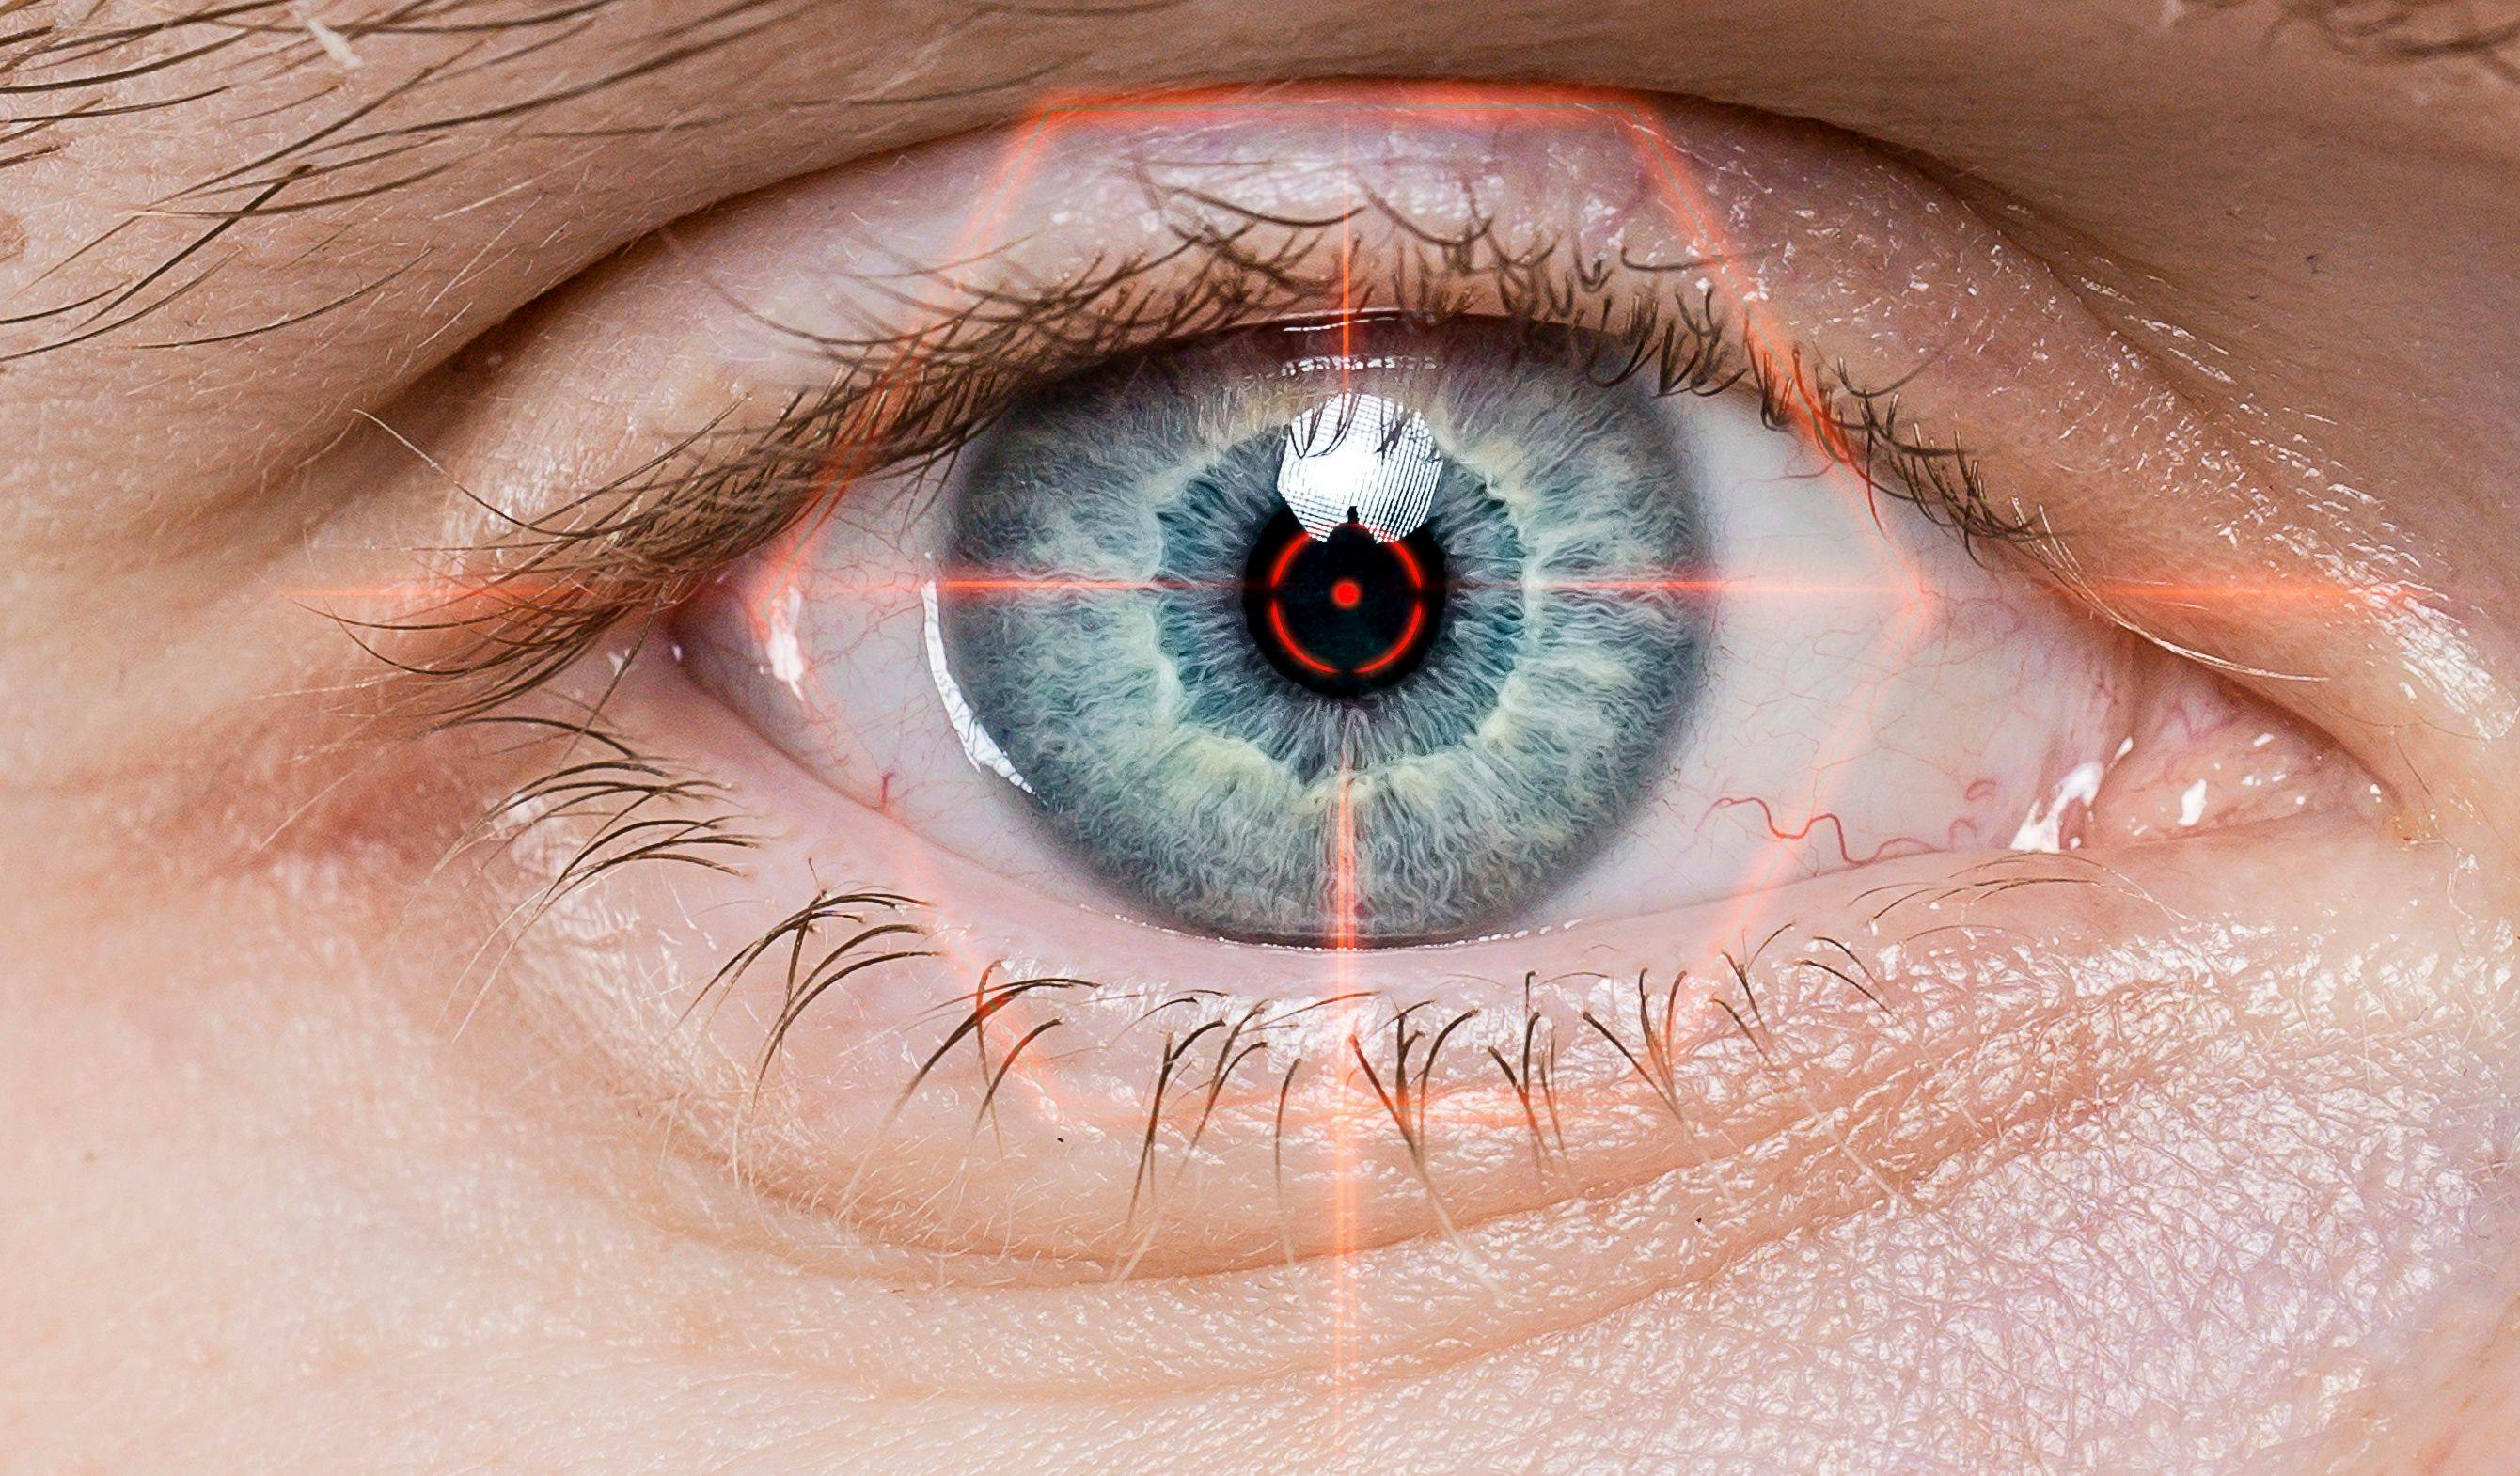 Retina scan concept | Image credit: Oz - stock.adobe.com